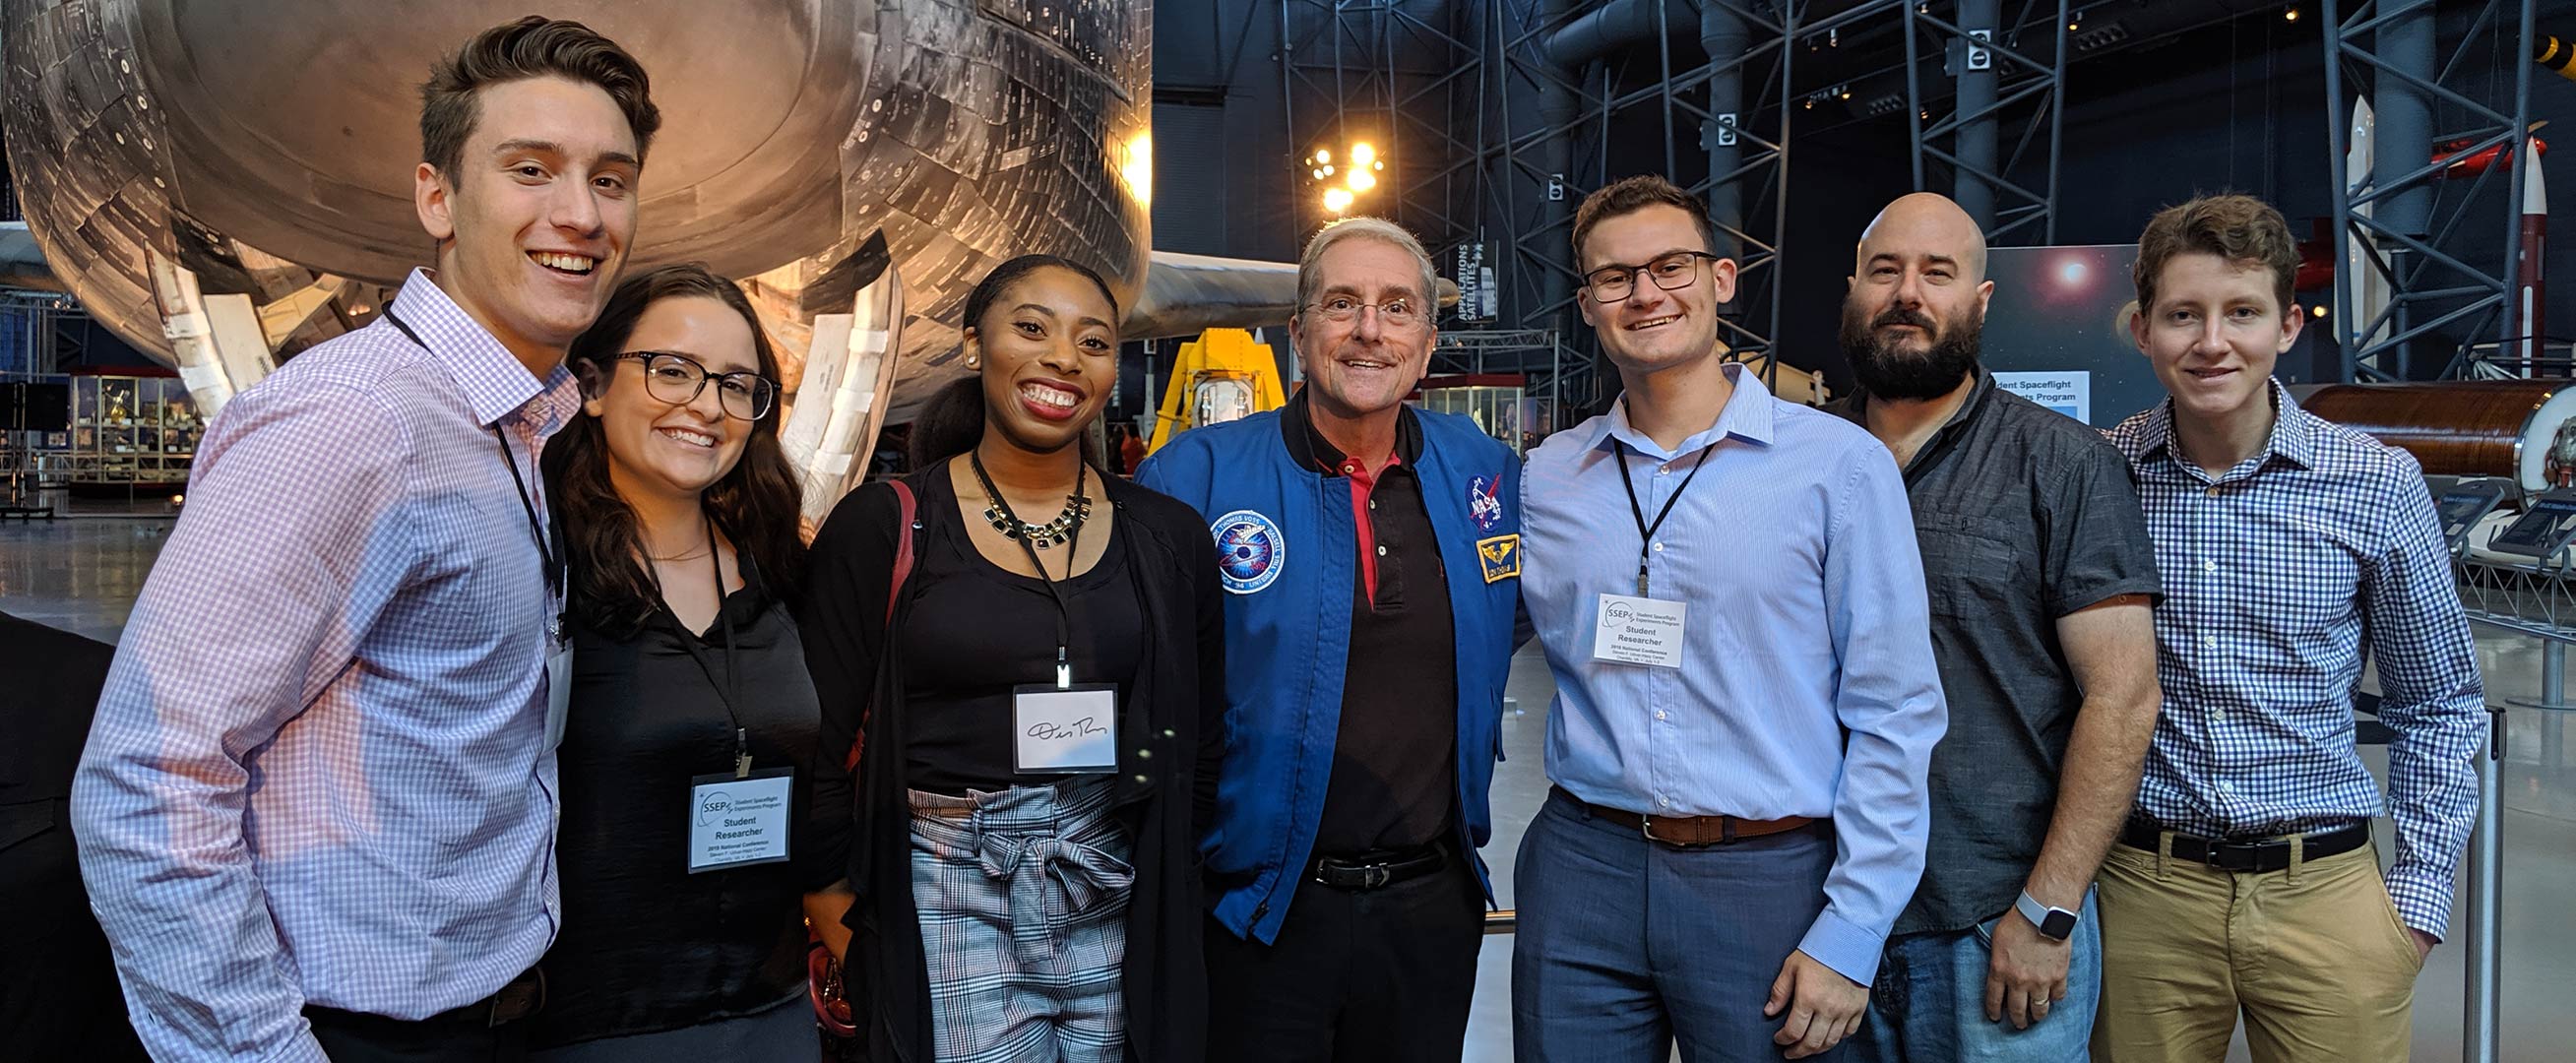 From left, Joseph Romanowski, Christina Tallone, Chioma Uka, former NASA astronaut Donald Thomas, Michael Elko, Professor Michael Law and Daniel Stoyk.